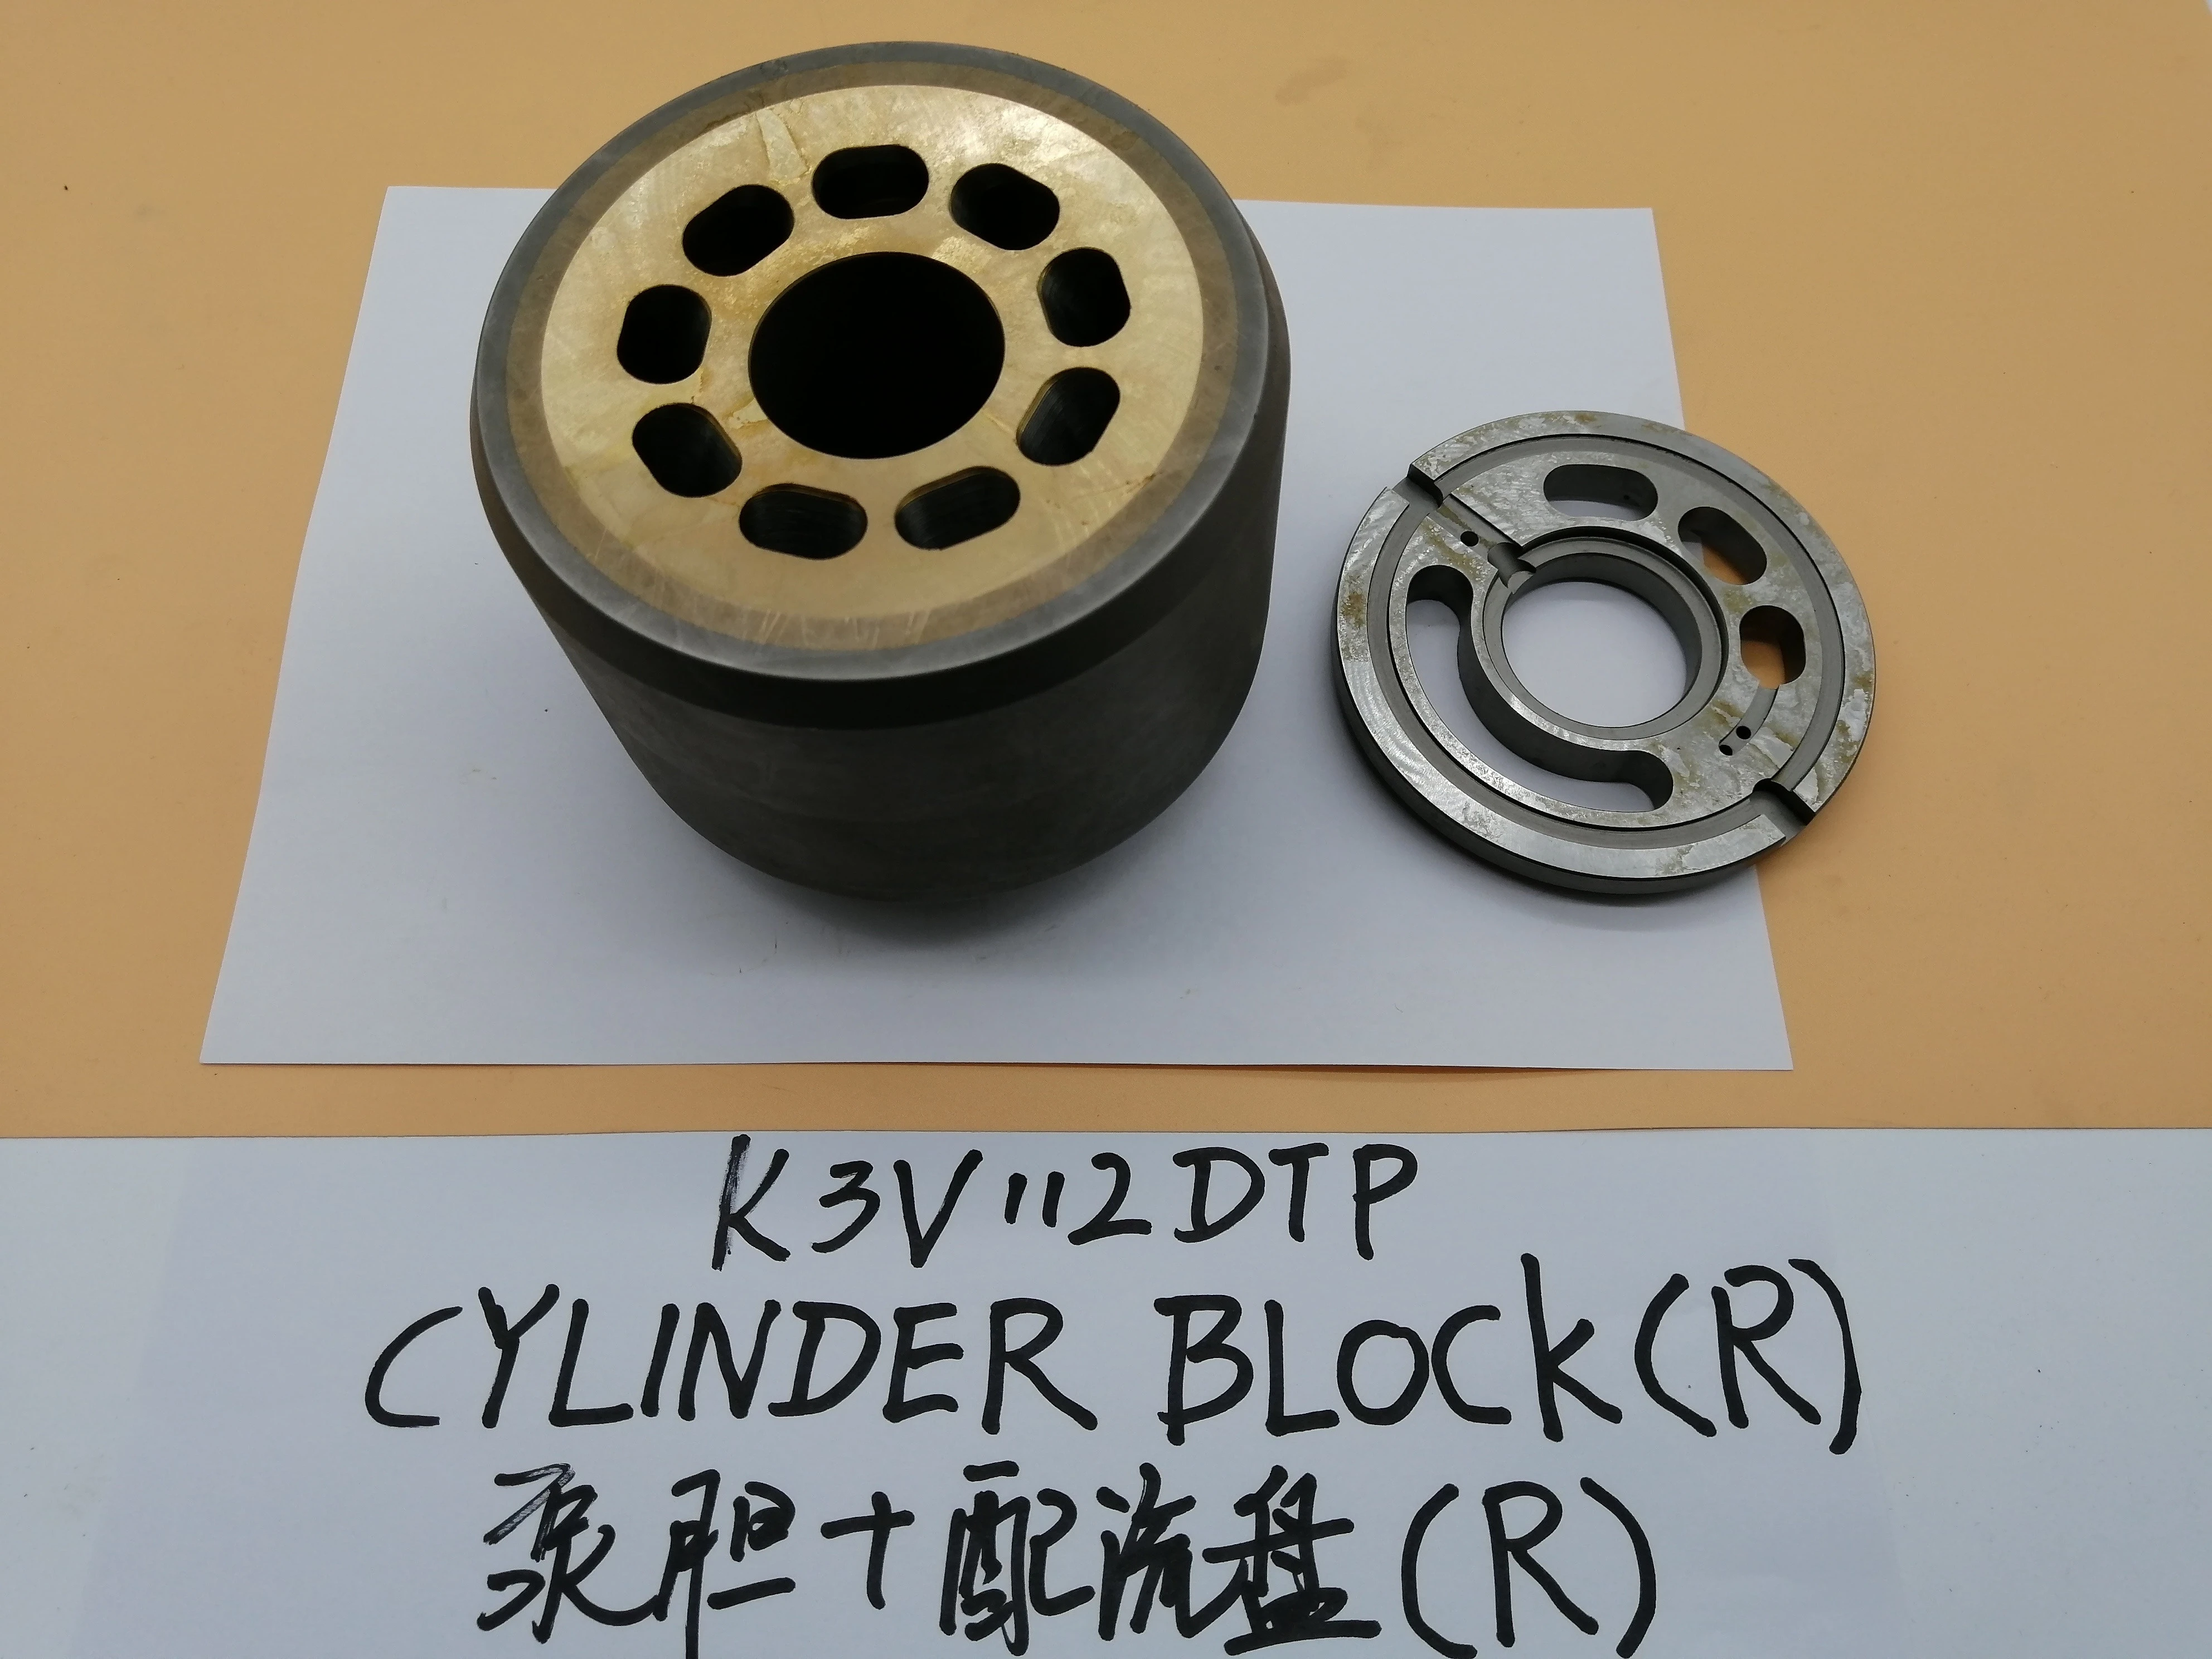 Handok K3V112DTP Cylinder Block with Valve Plate, SH200-3 Excavator Hydraulic Pump Parts